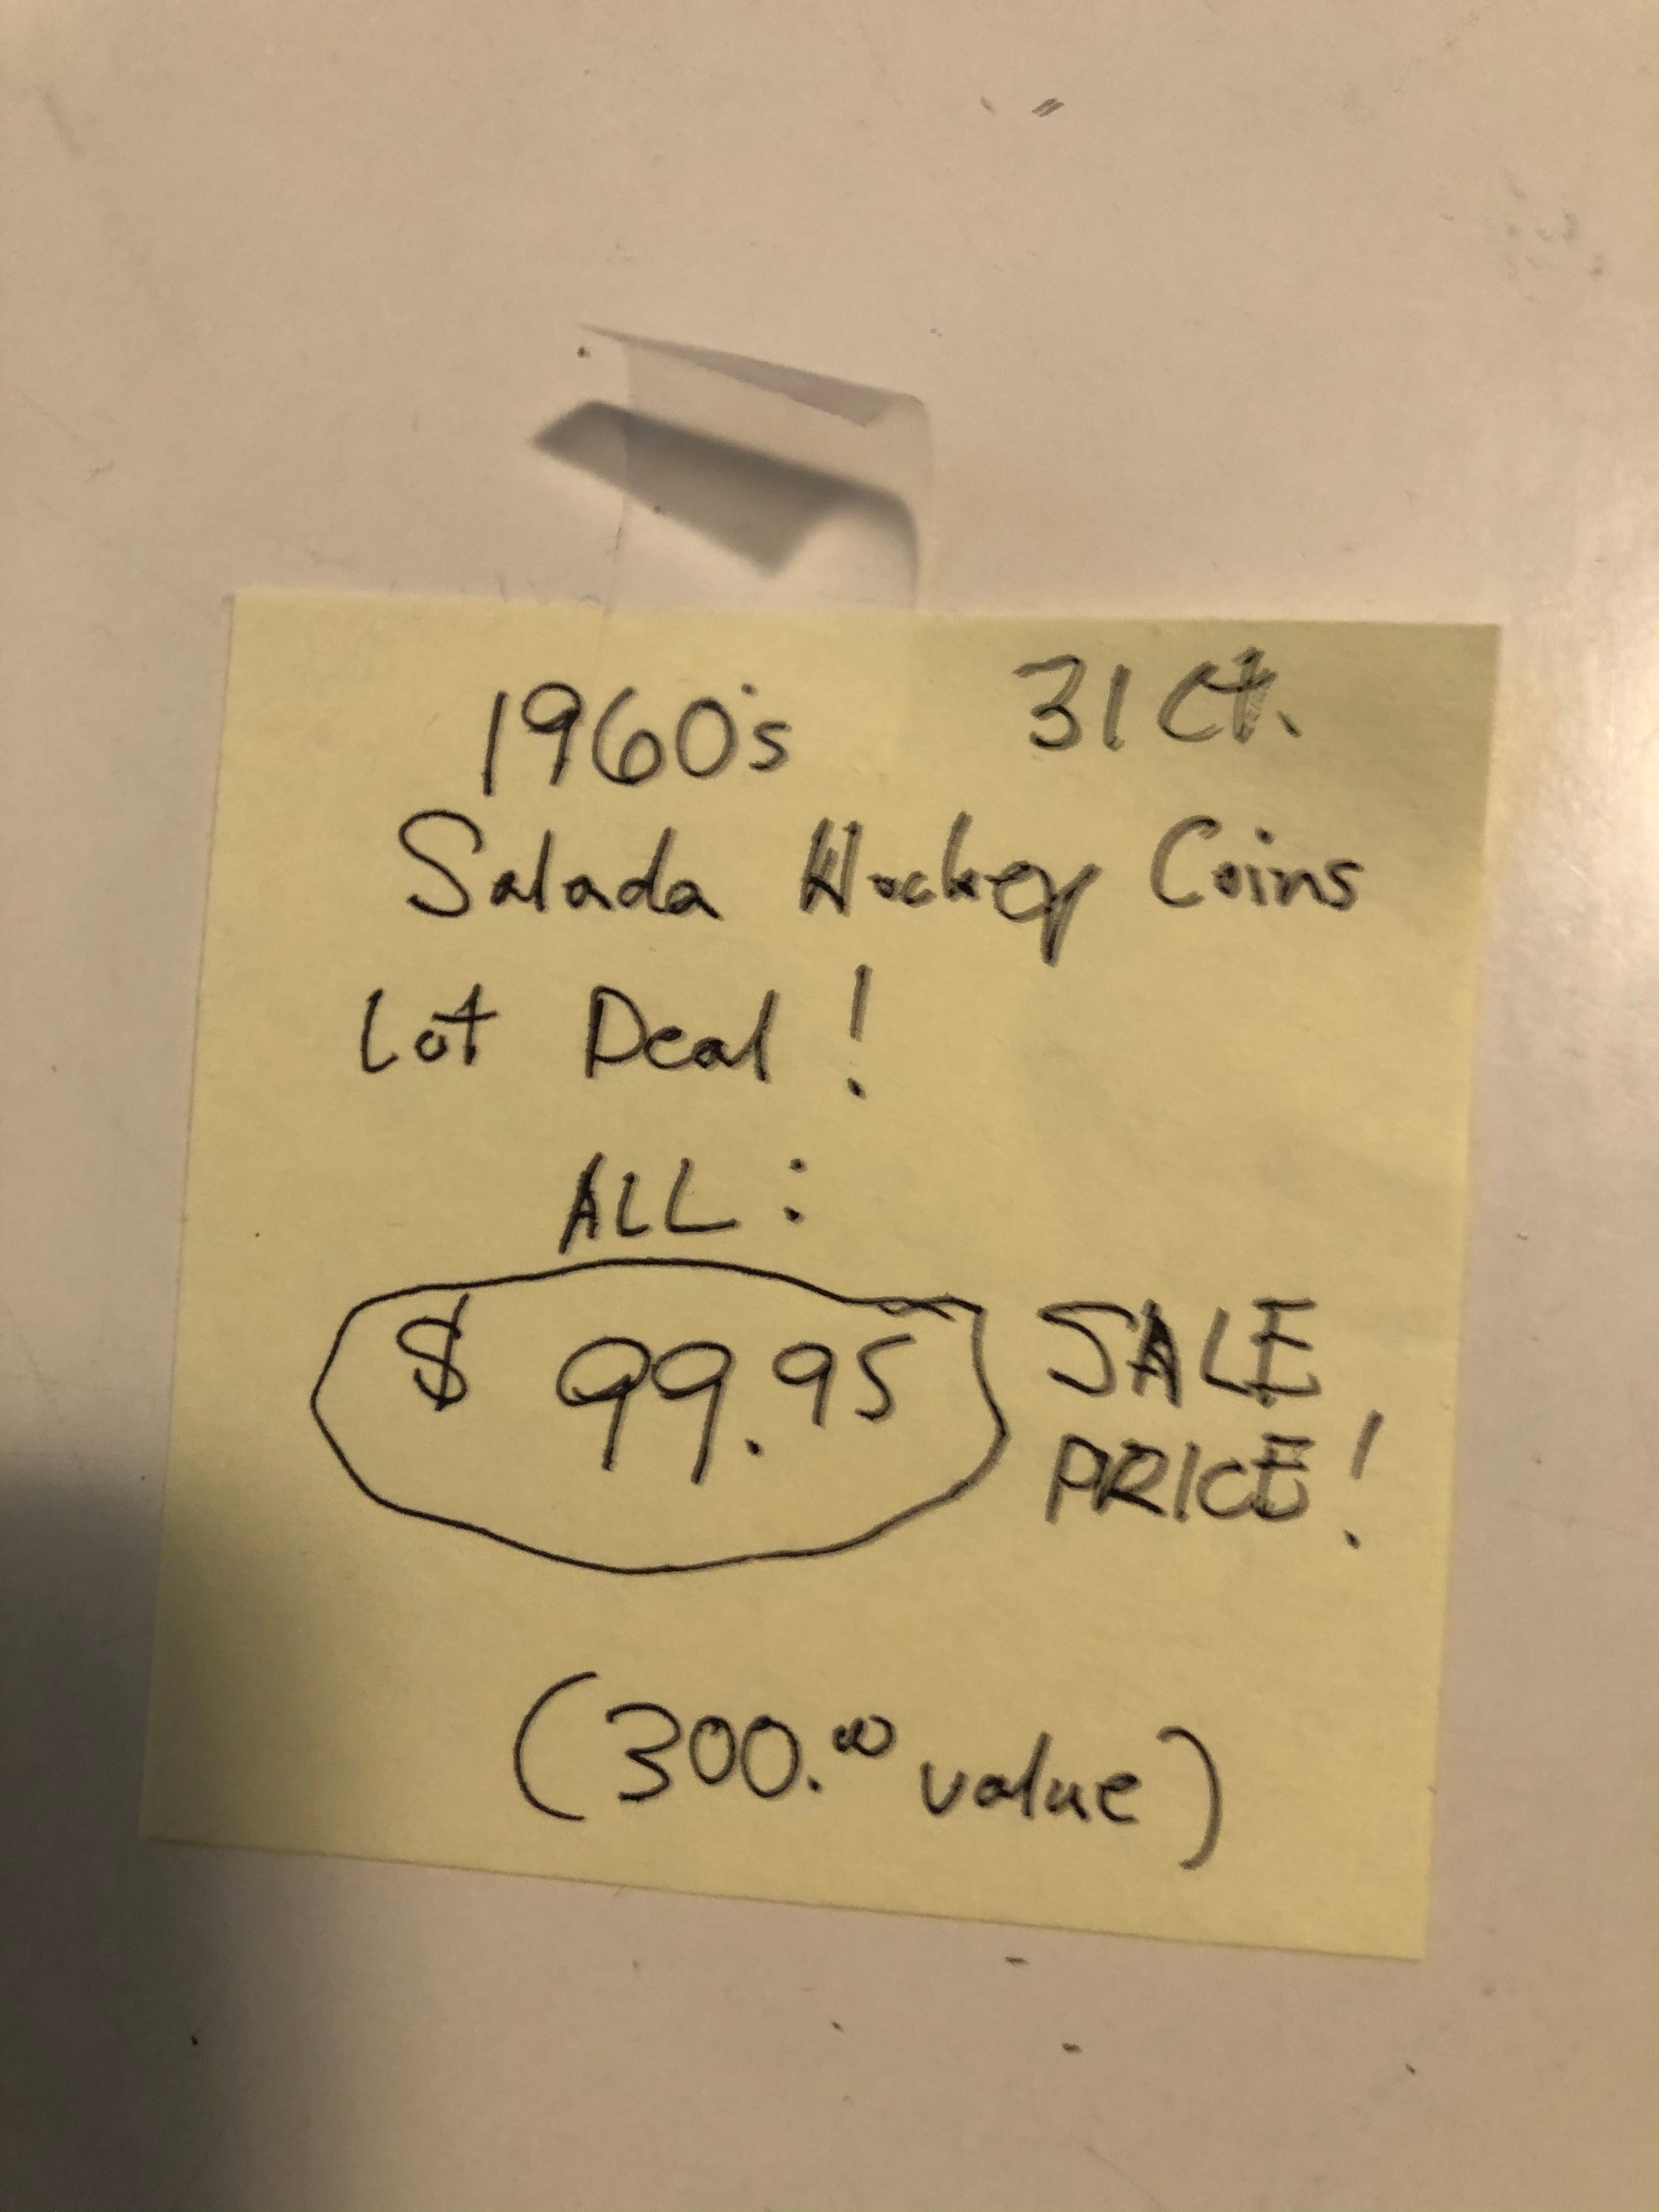 1960s Salada vintage Hockey coins 31 ct lot deal